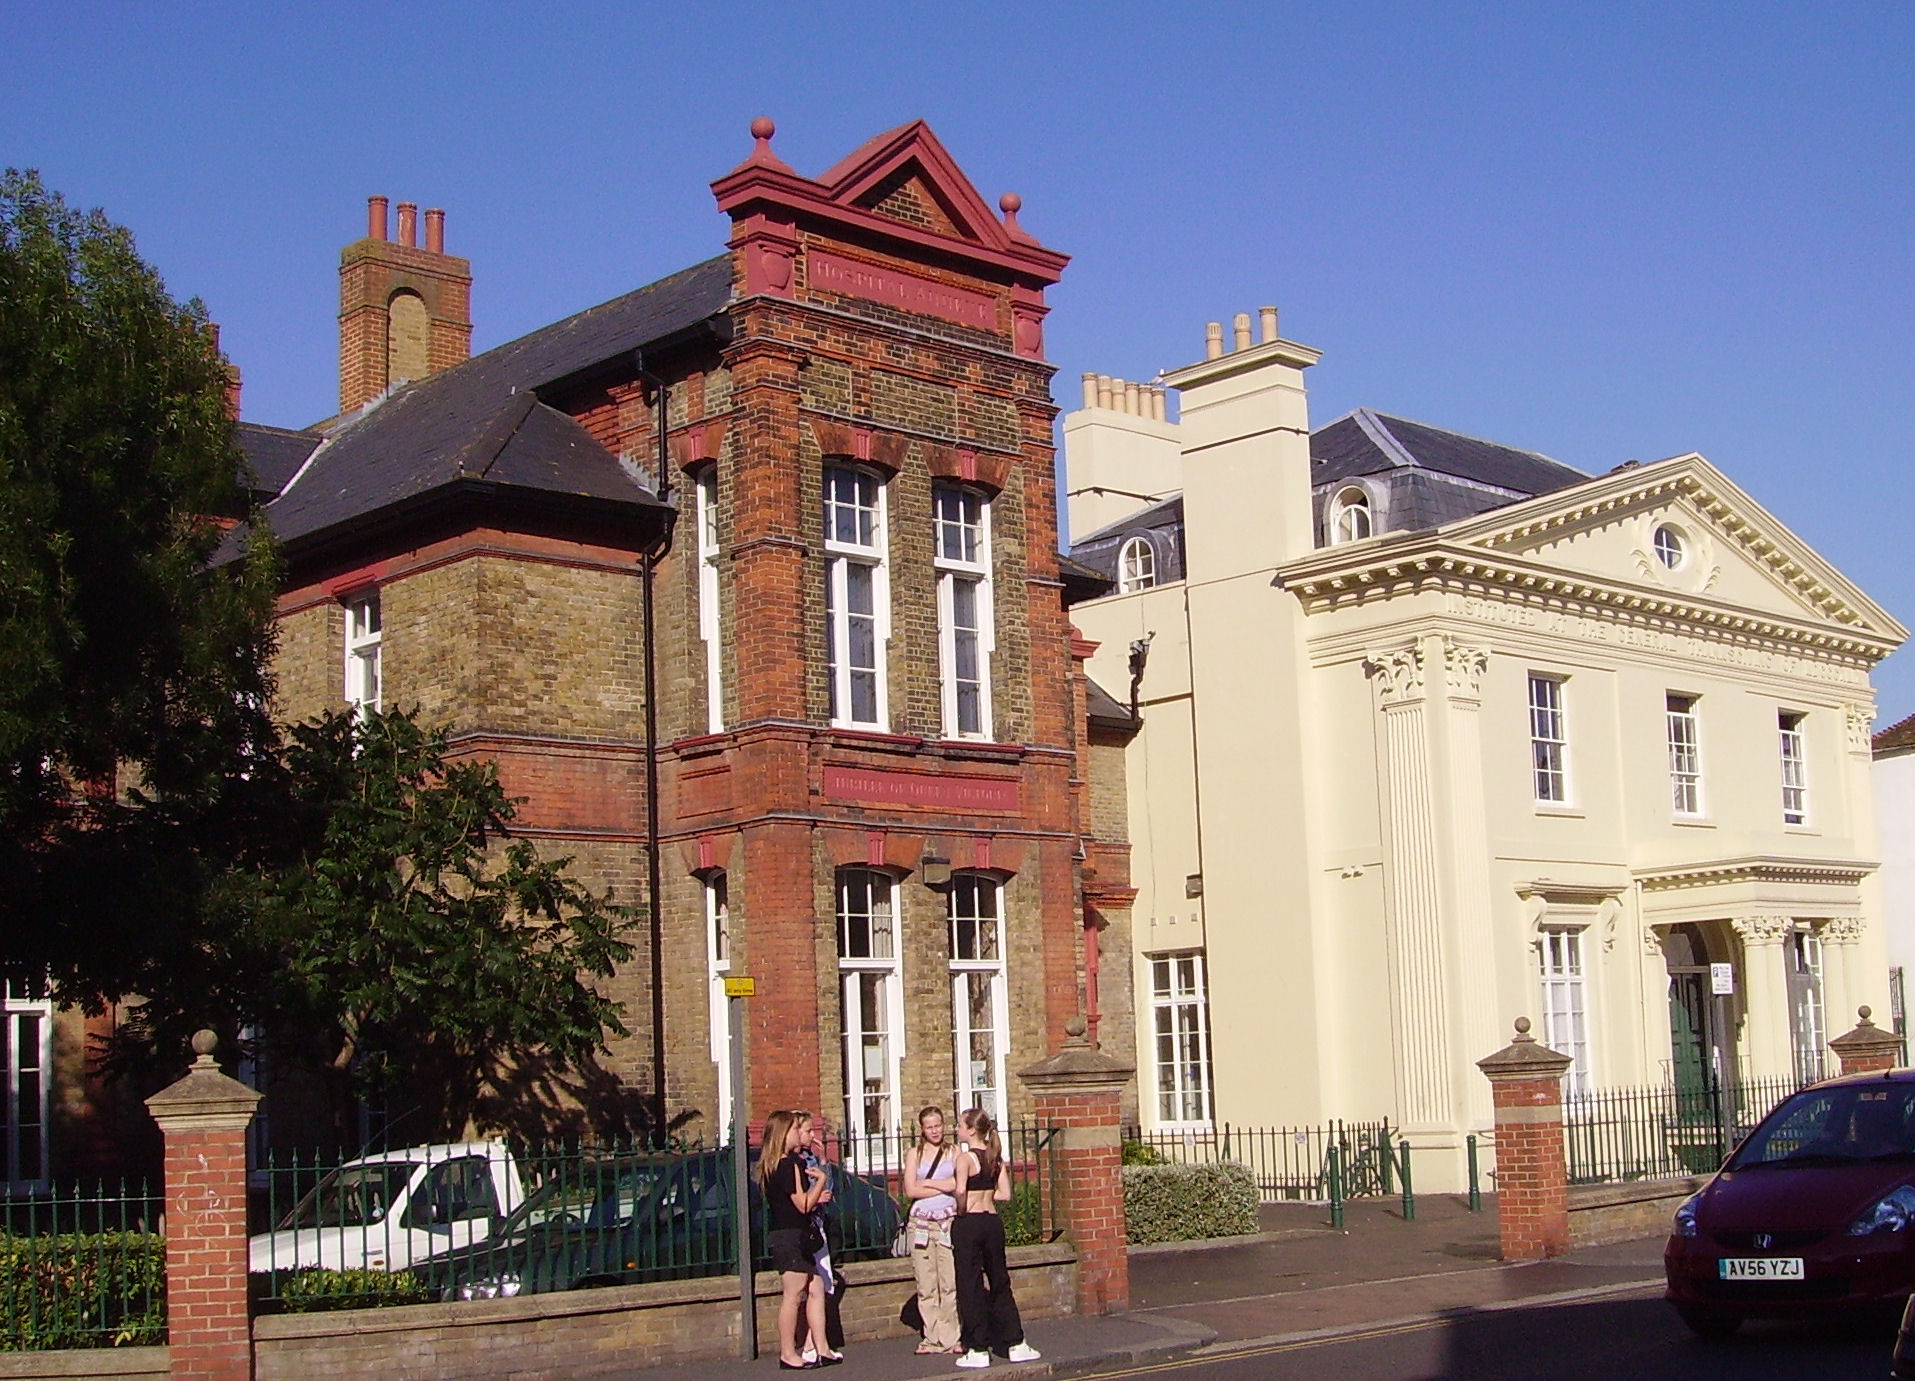 Royal Victoria Hospital, Dover